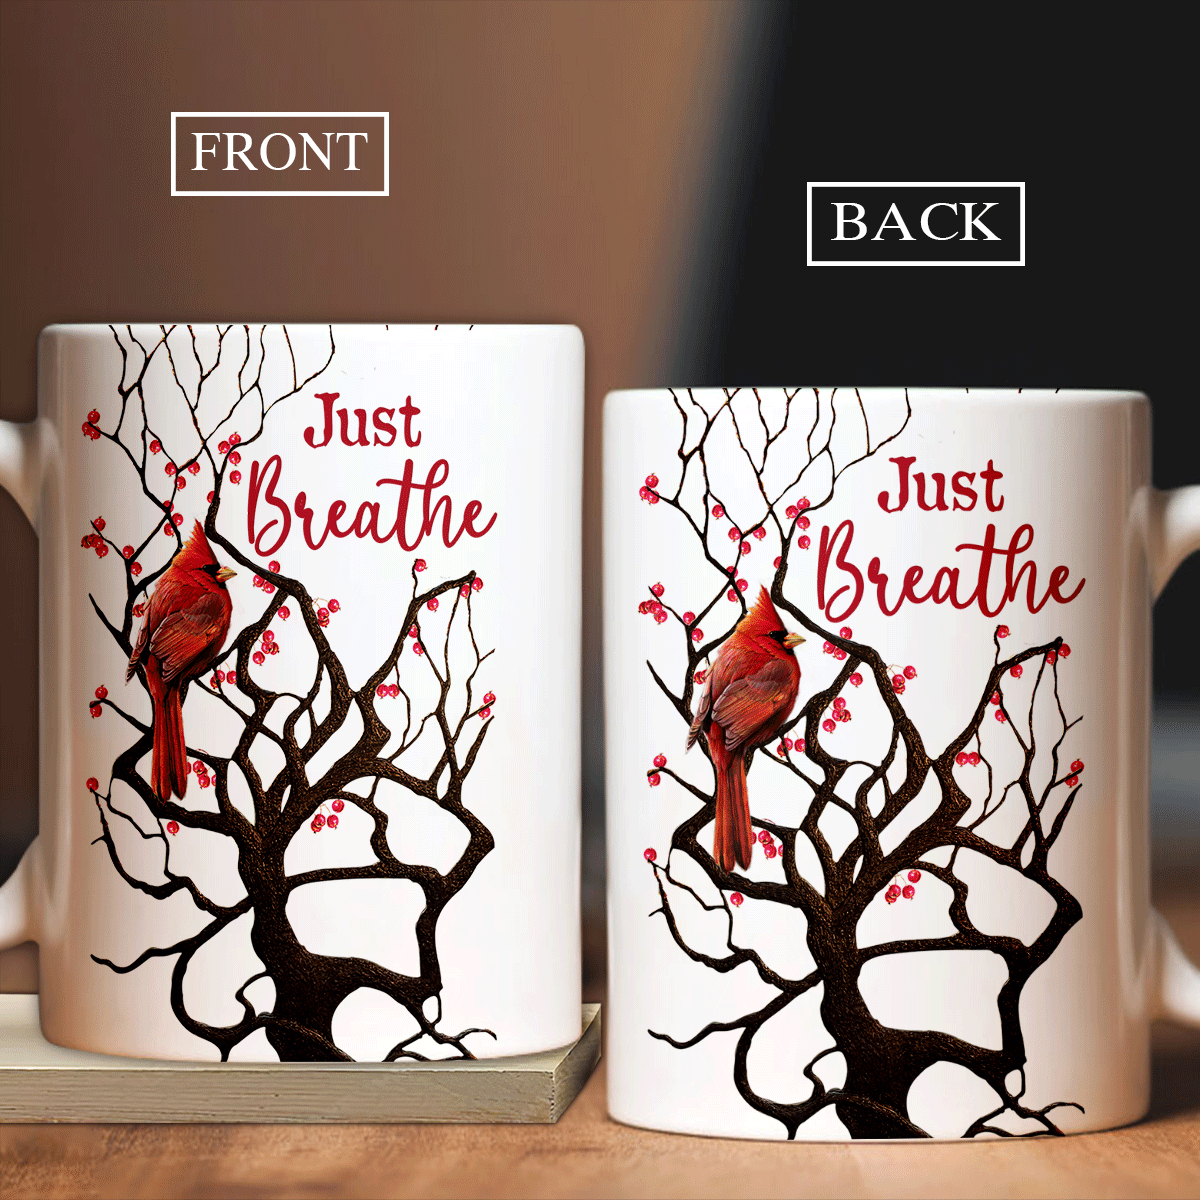 Memorial White Mug - Cranberry tree, Big red cardinal, Winter painting - Gift for members family - Just breathe - Heaven White Mug.